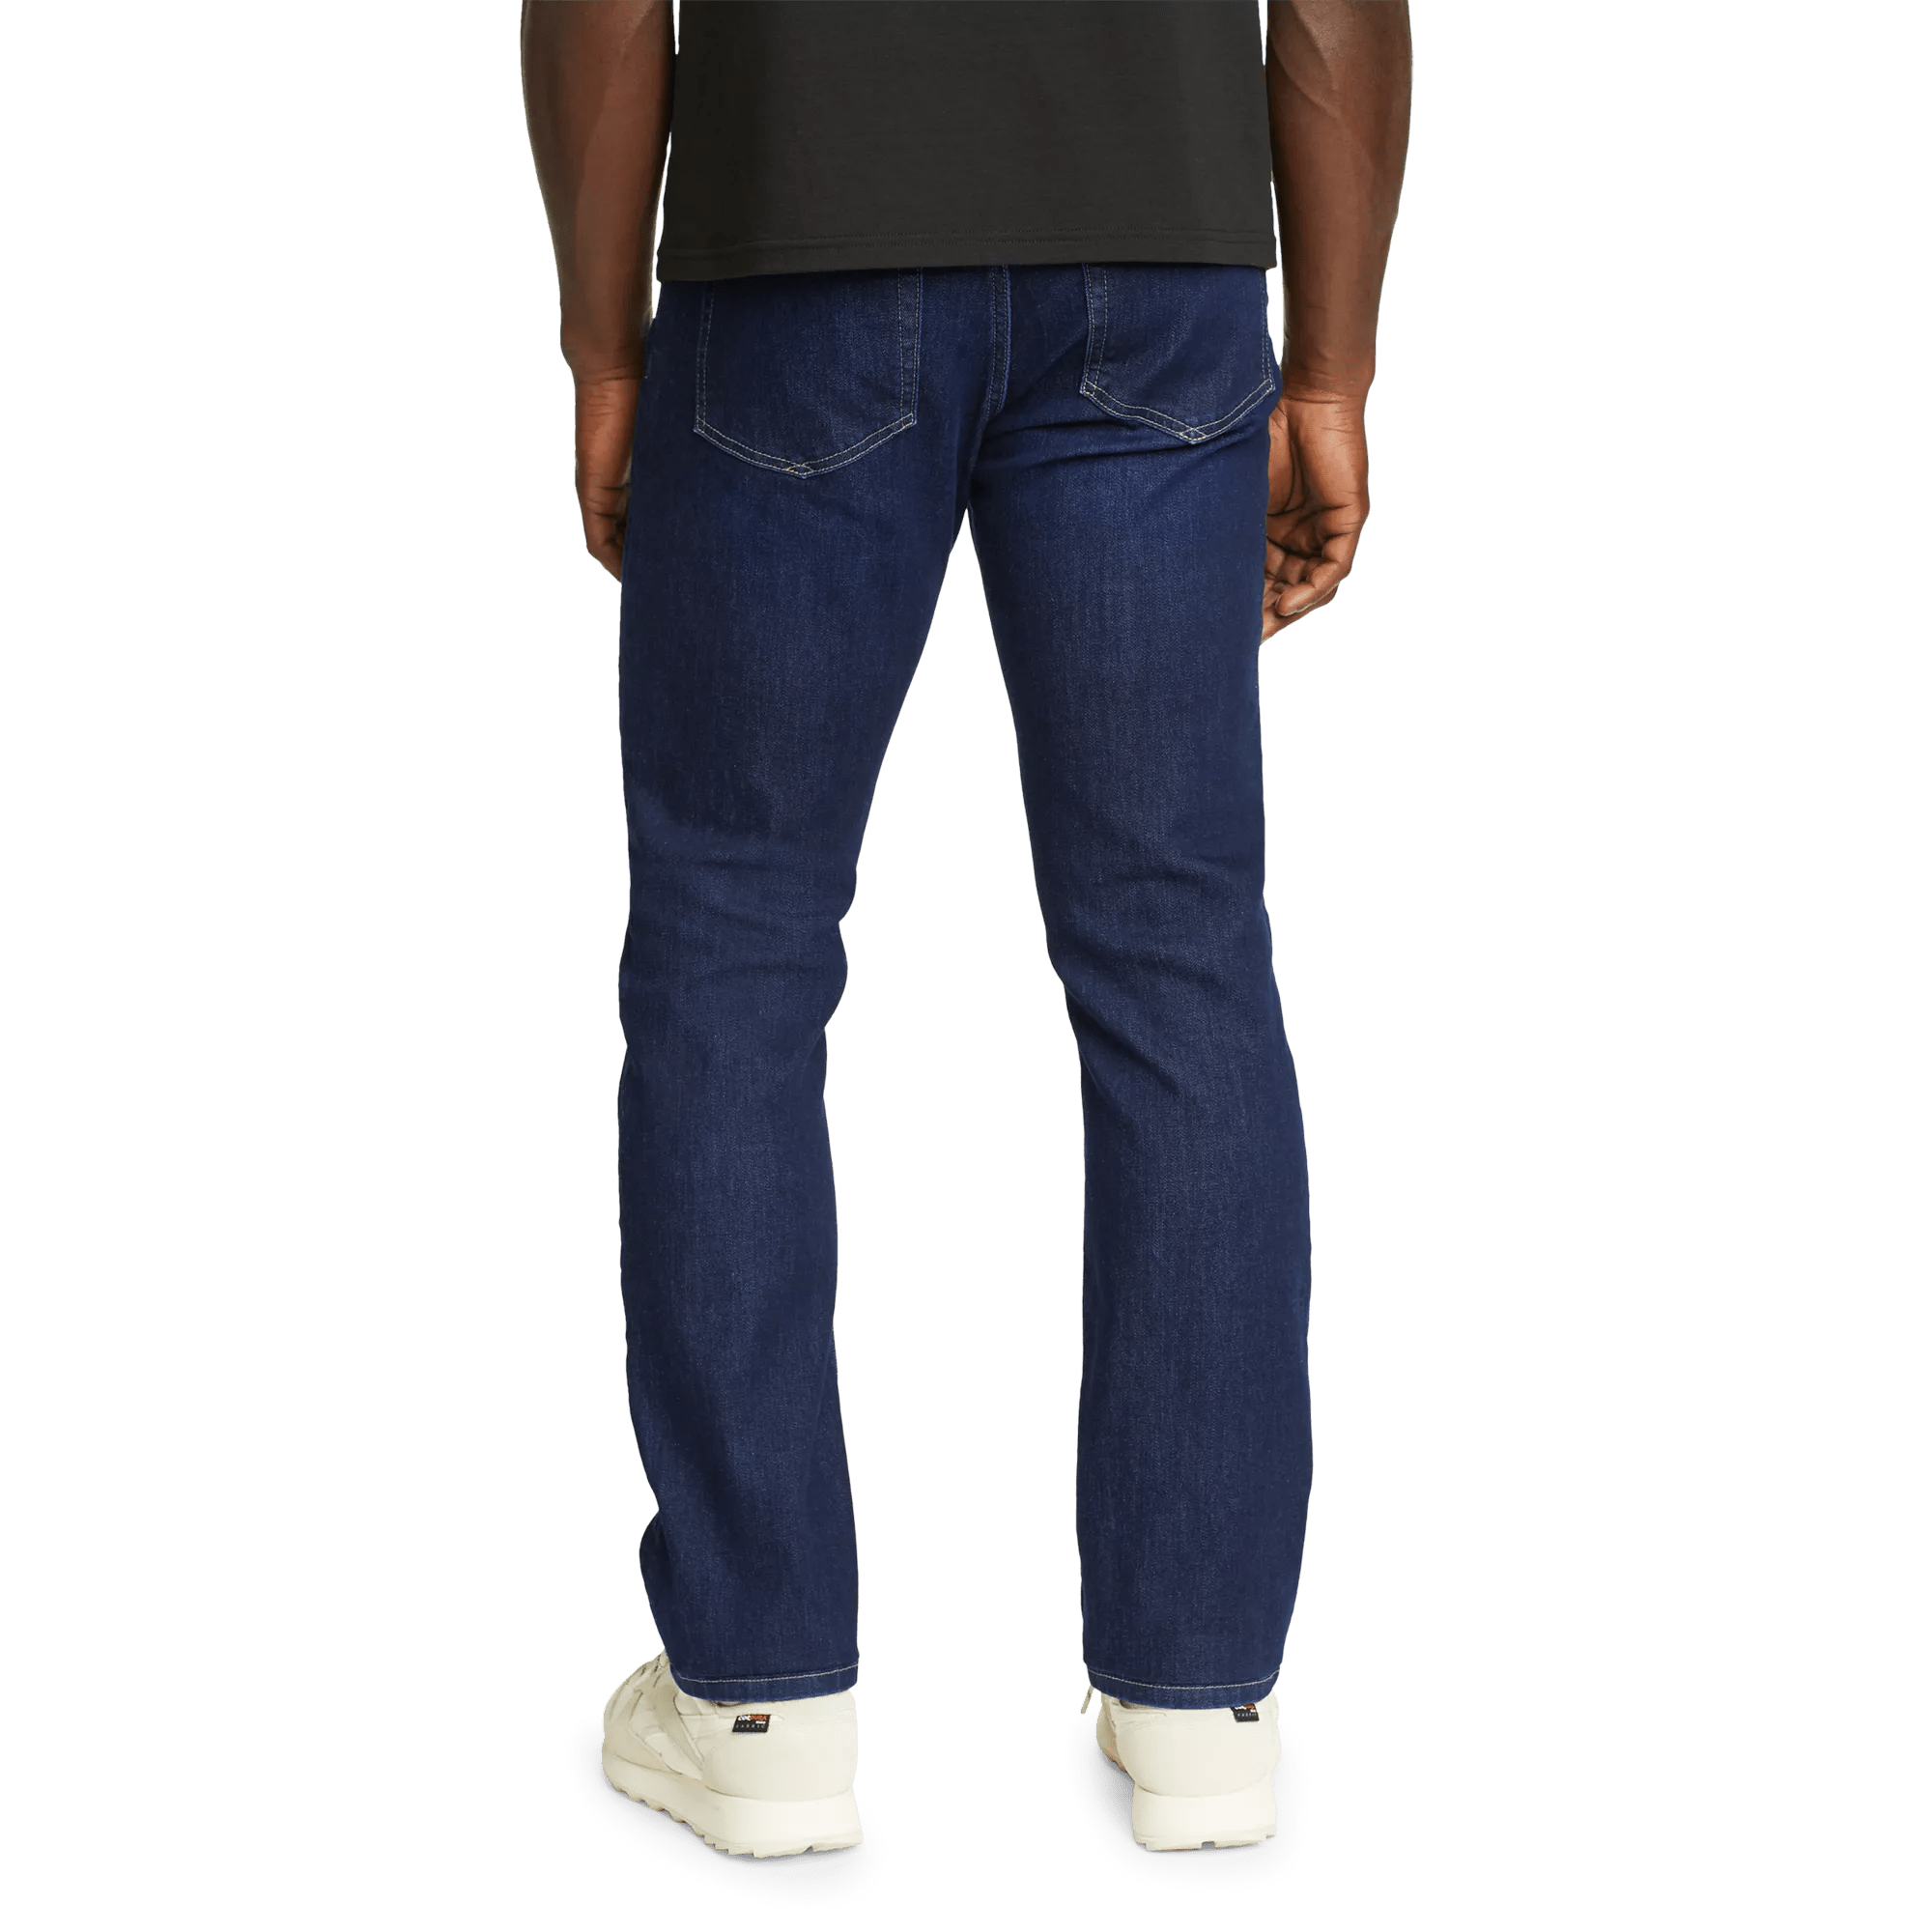 Voyager Flex 2.0 Slim Fit Jeans